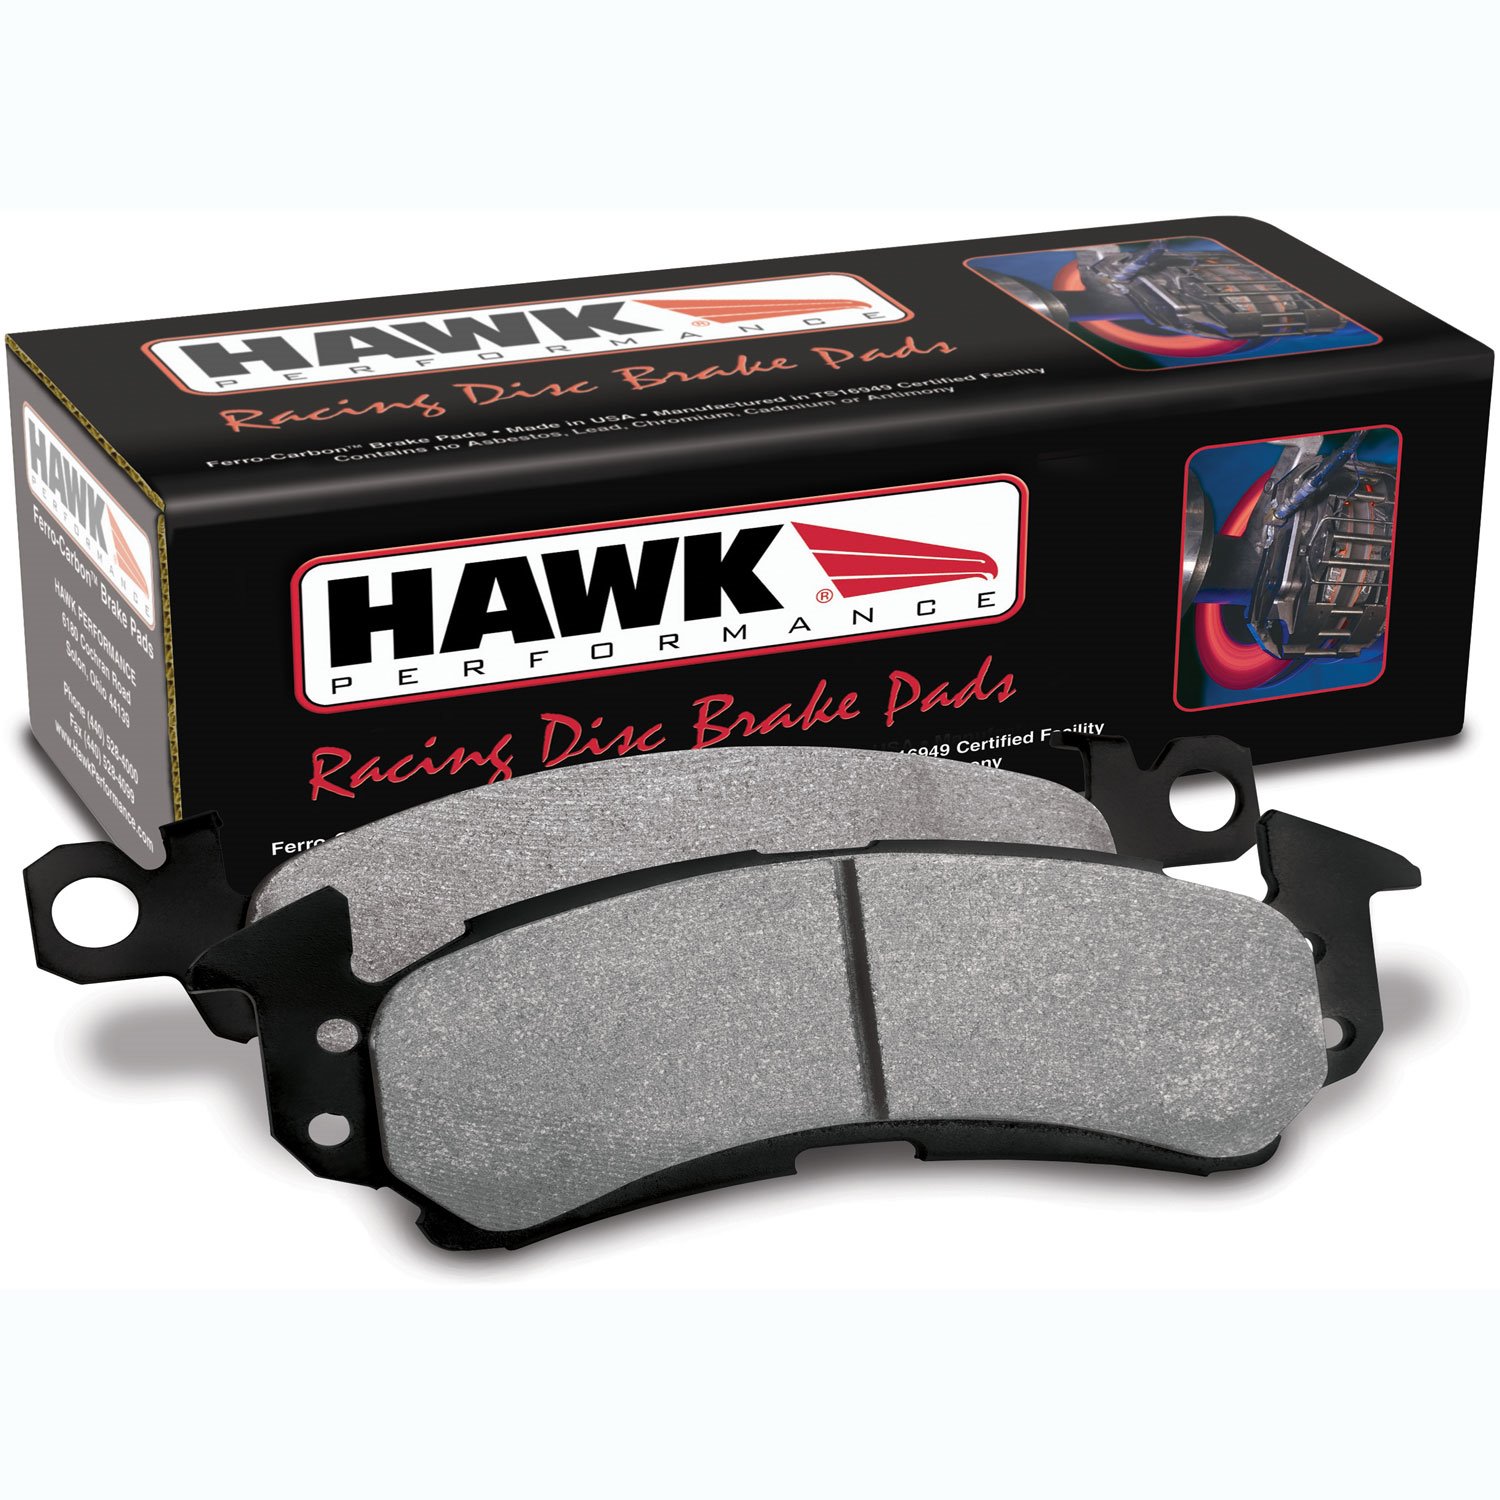 Disc Brake Pad HT-10 w/0.748 Thickness